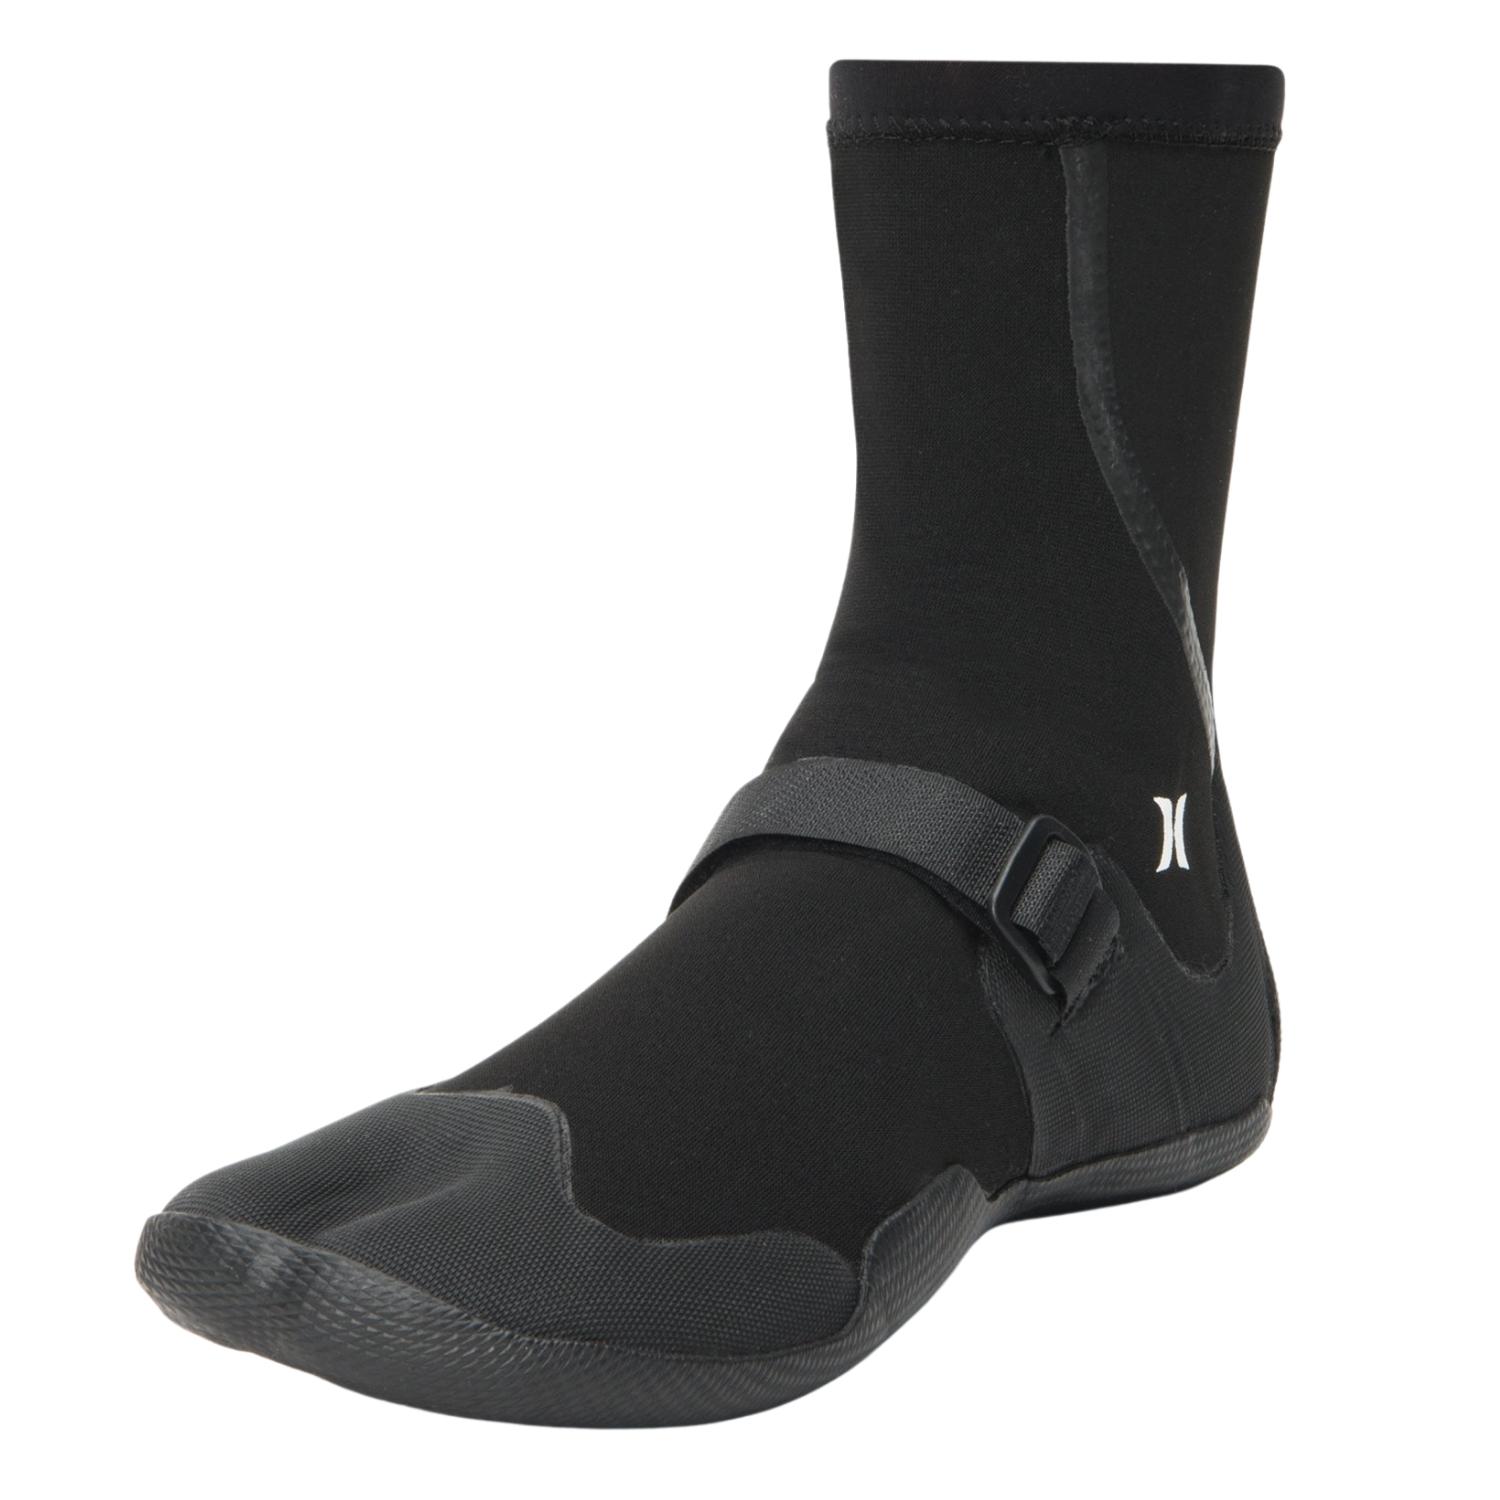 Hurley Advantage Plus 5mm Wetsuit Boots - Black - Split Toe Wetsuit Boots by Hurley